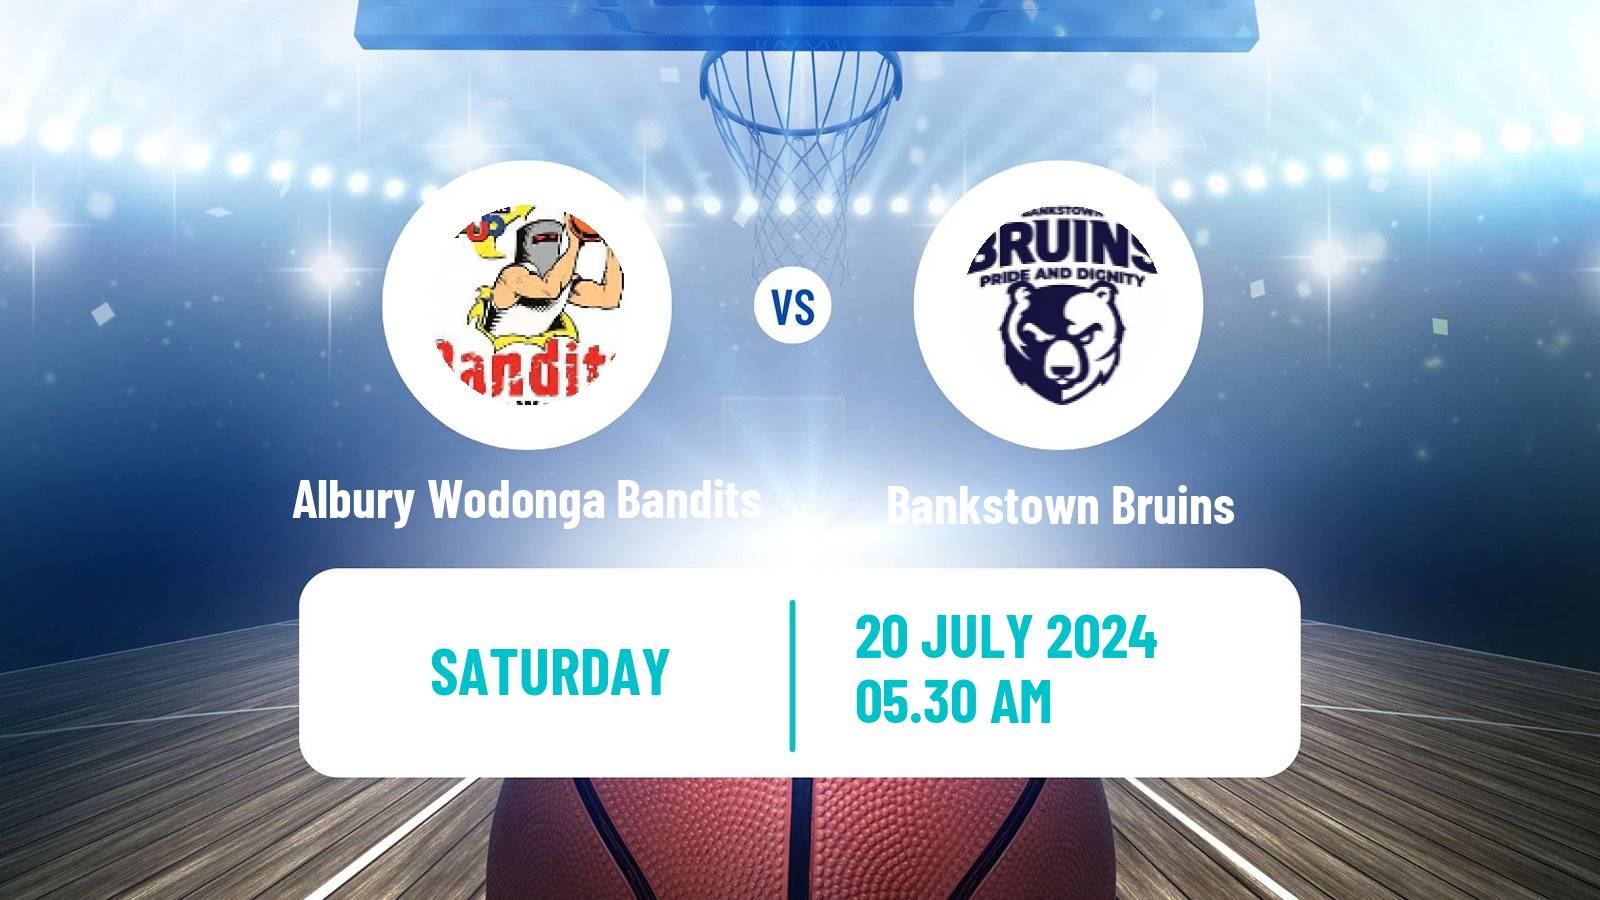 Basketball Australian NBL1 East Albury Wodonga Bandits - Bankstown Bruins